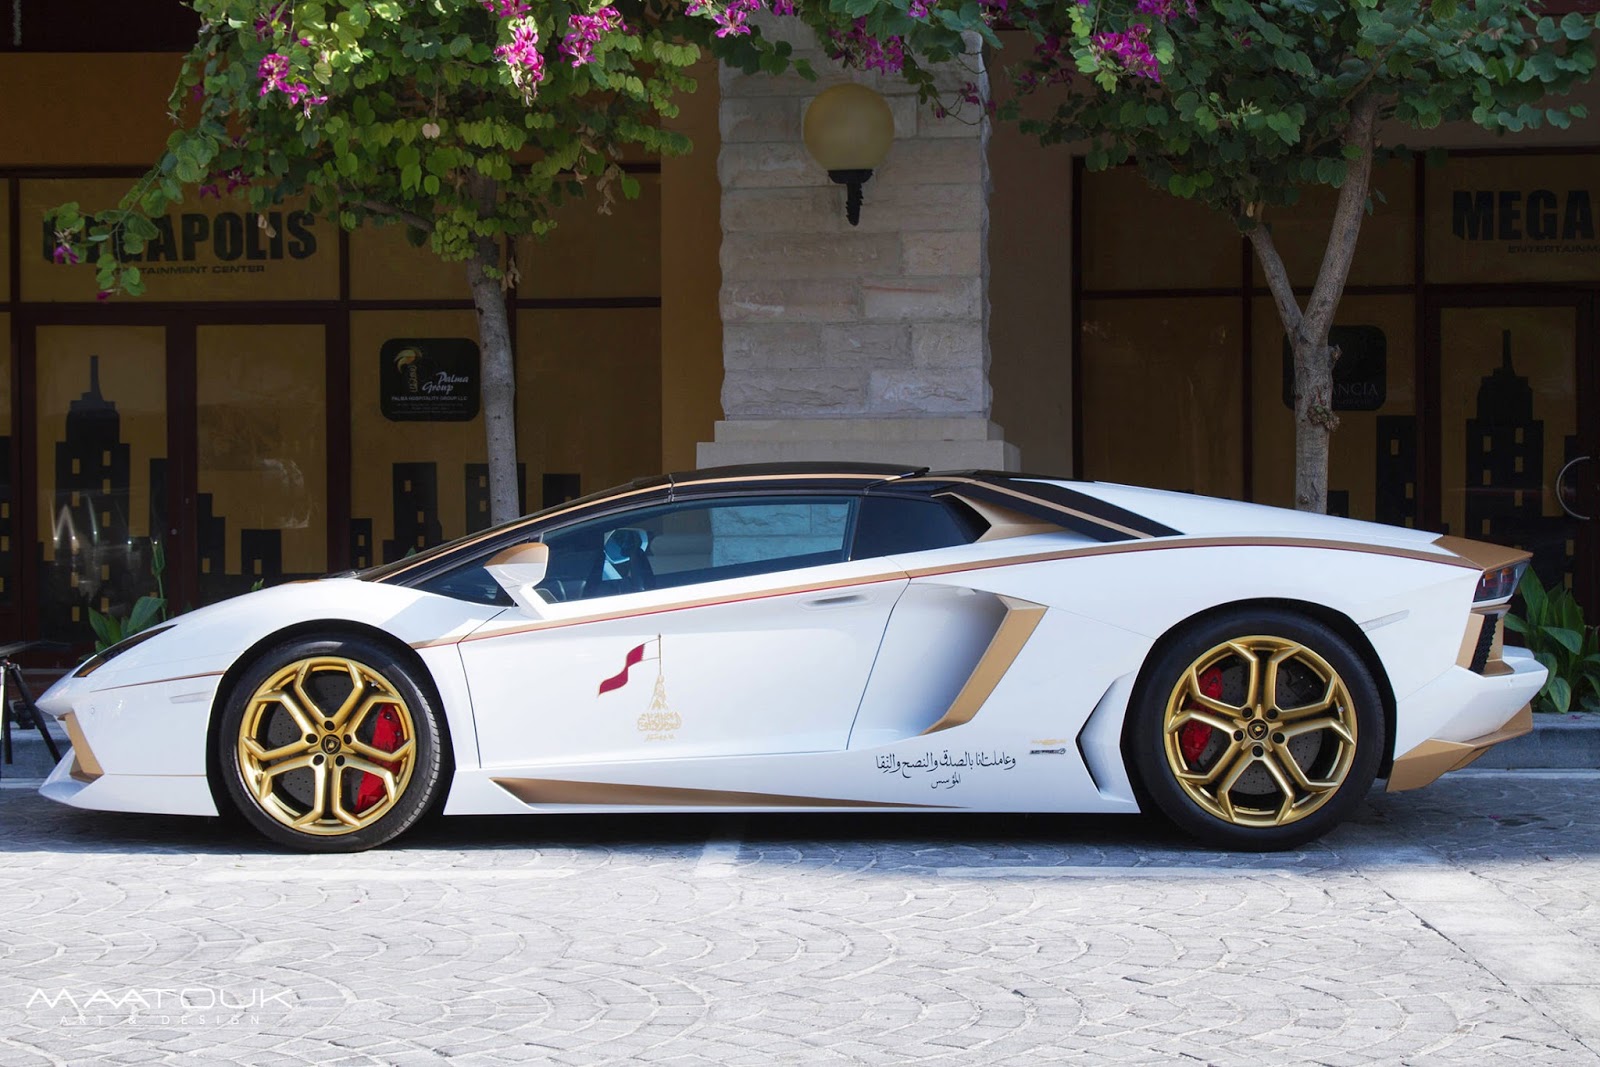 Meet the one-off gold plated Lamborghini Aventador ...